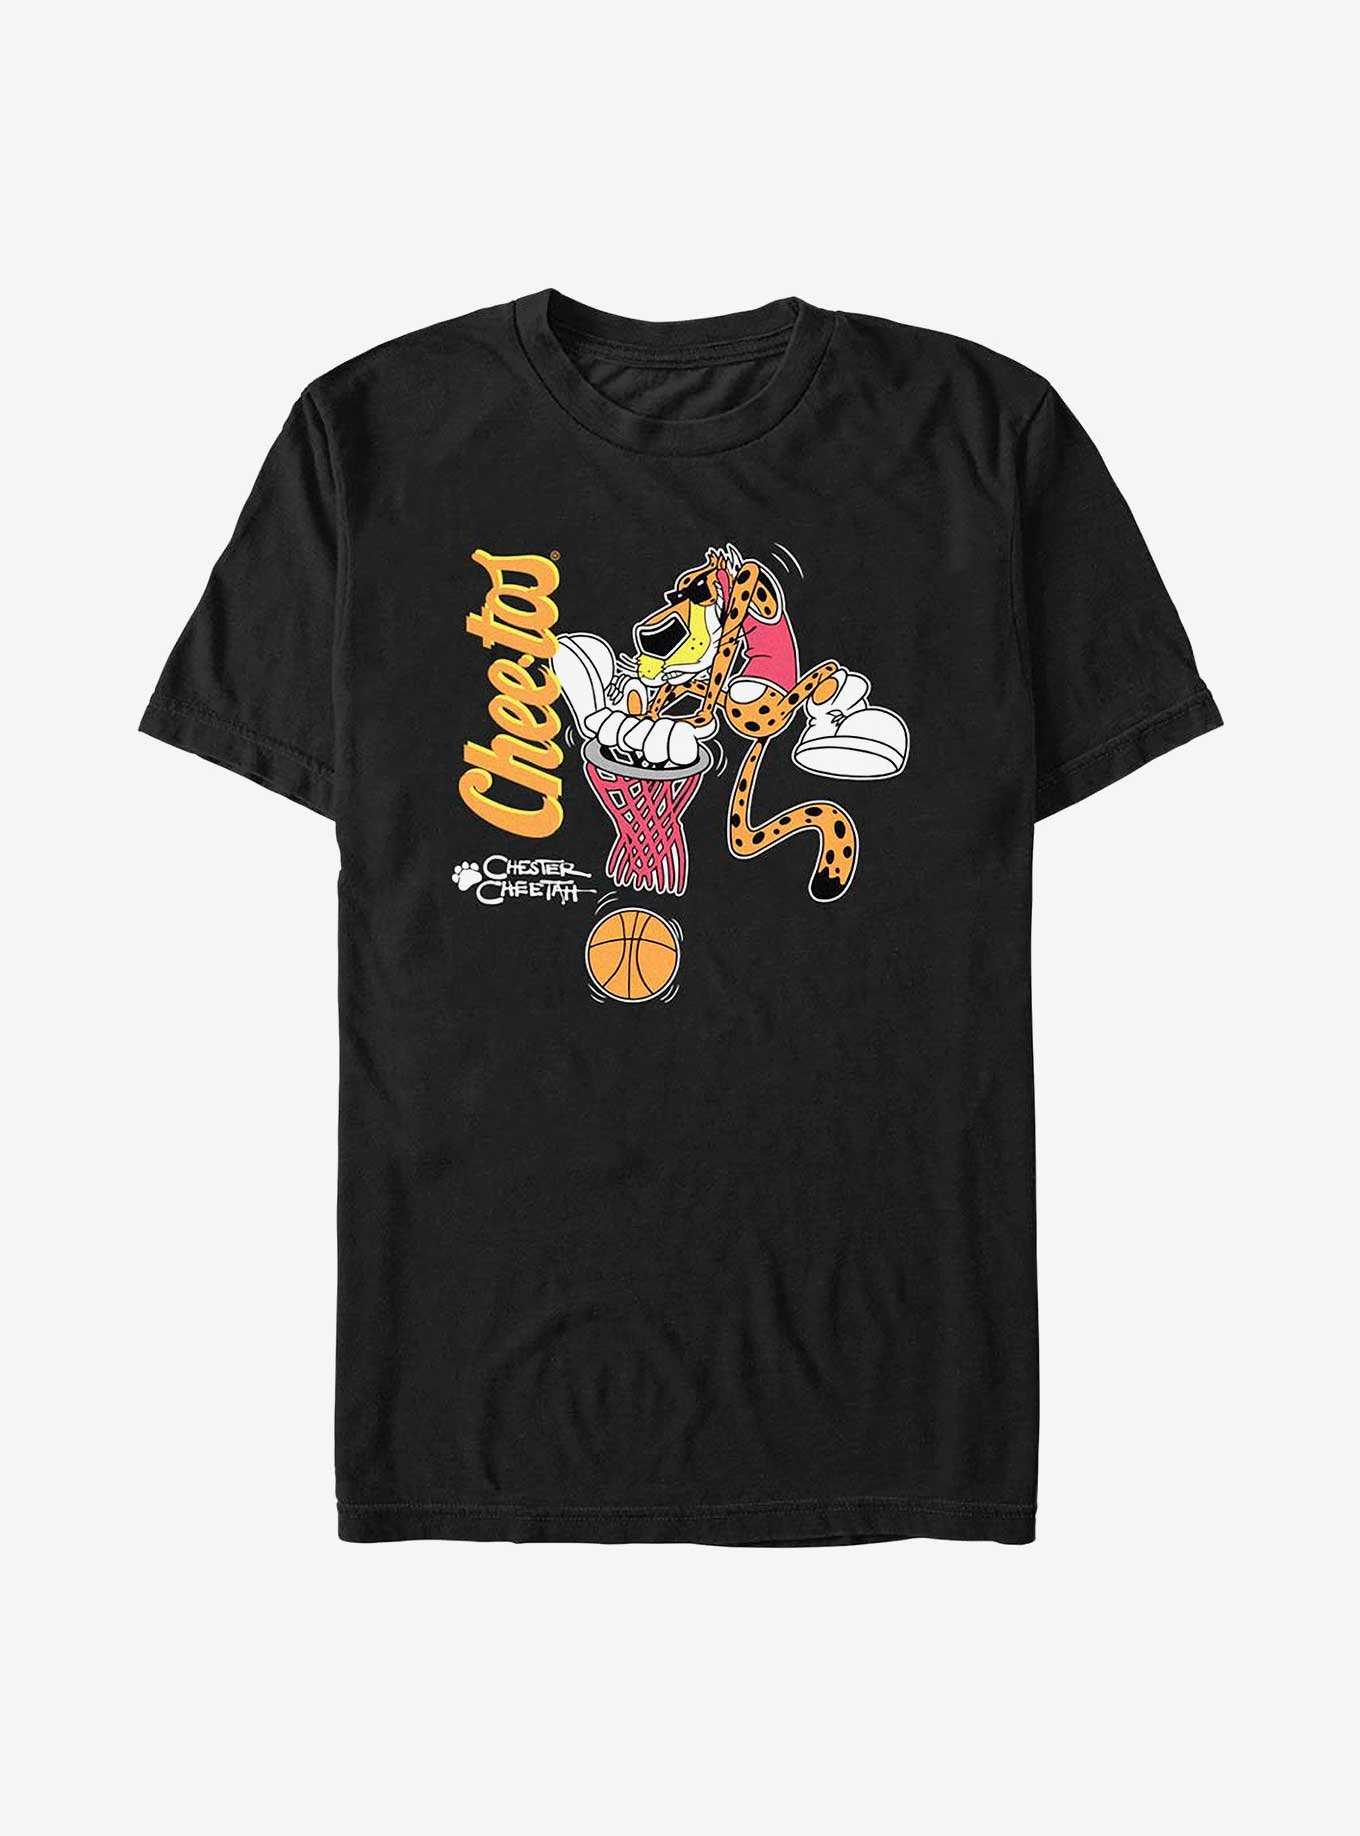 Cheetos 90S Chester Hoopin T-Shirt, , hi-res